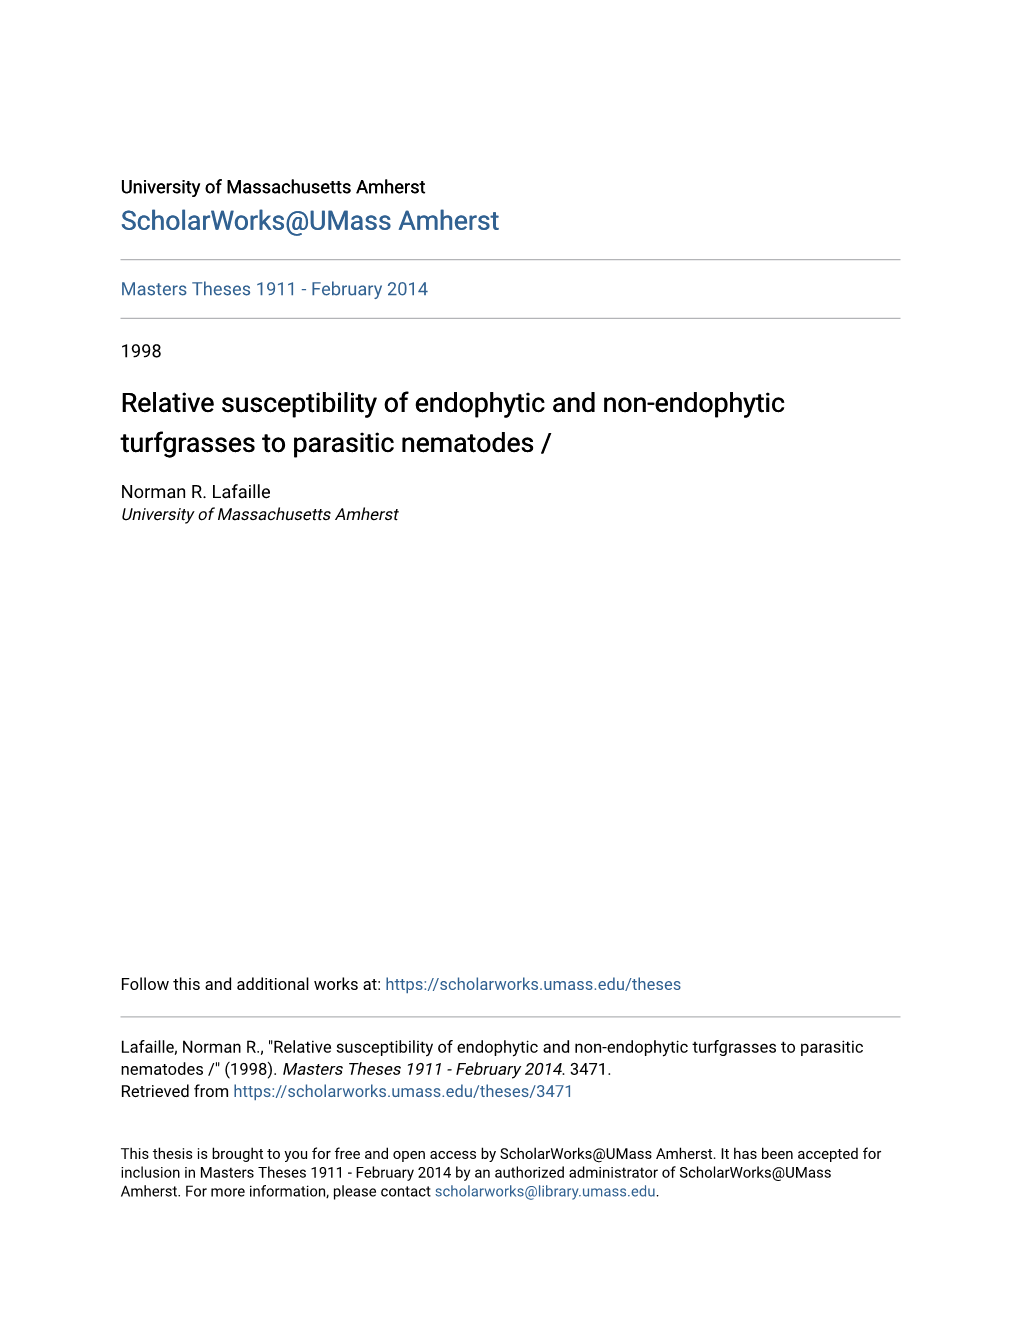 Relative Susceptibility of Endophytic and Non-Endophytic Turfgrasses to Parasitic Nematodes